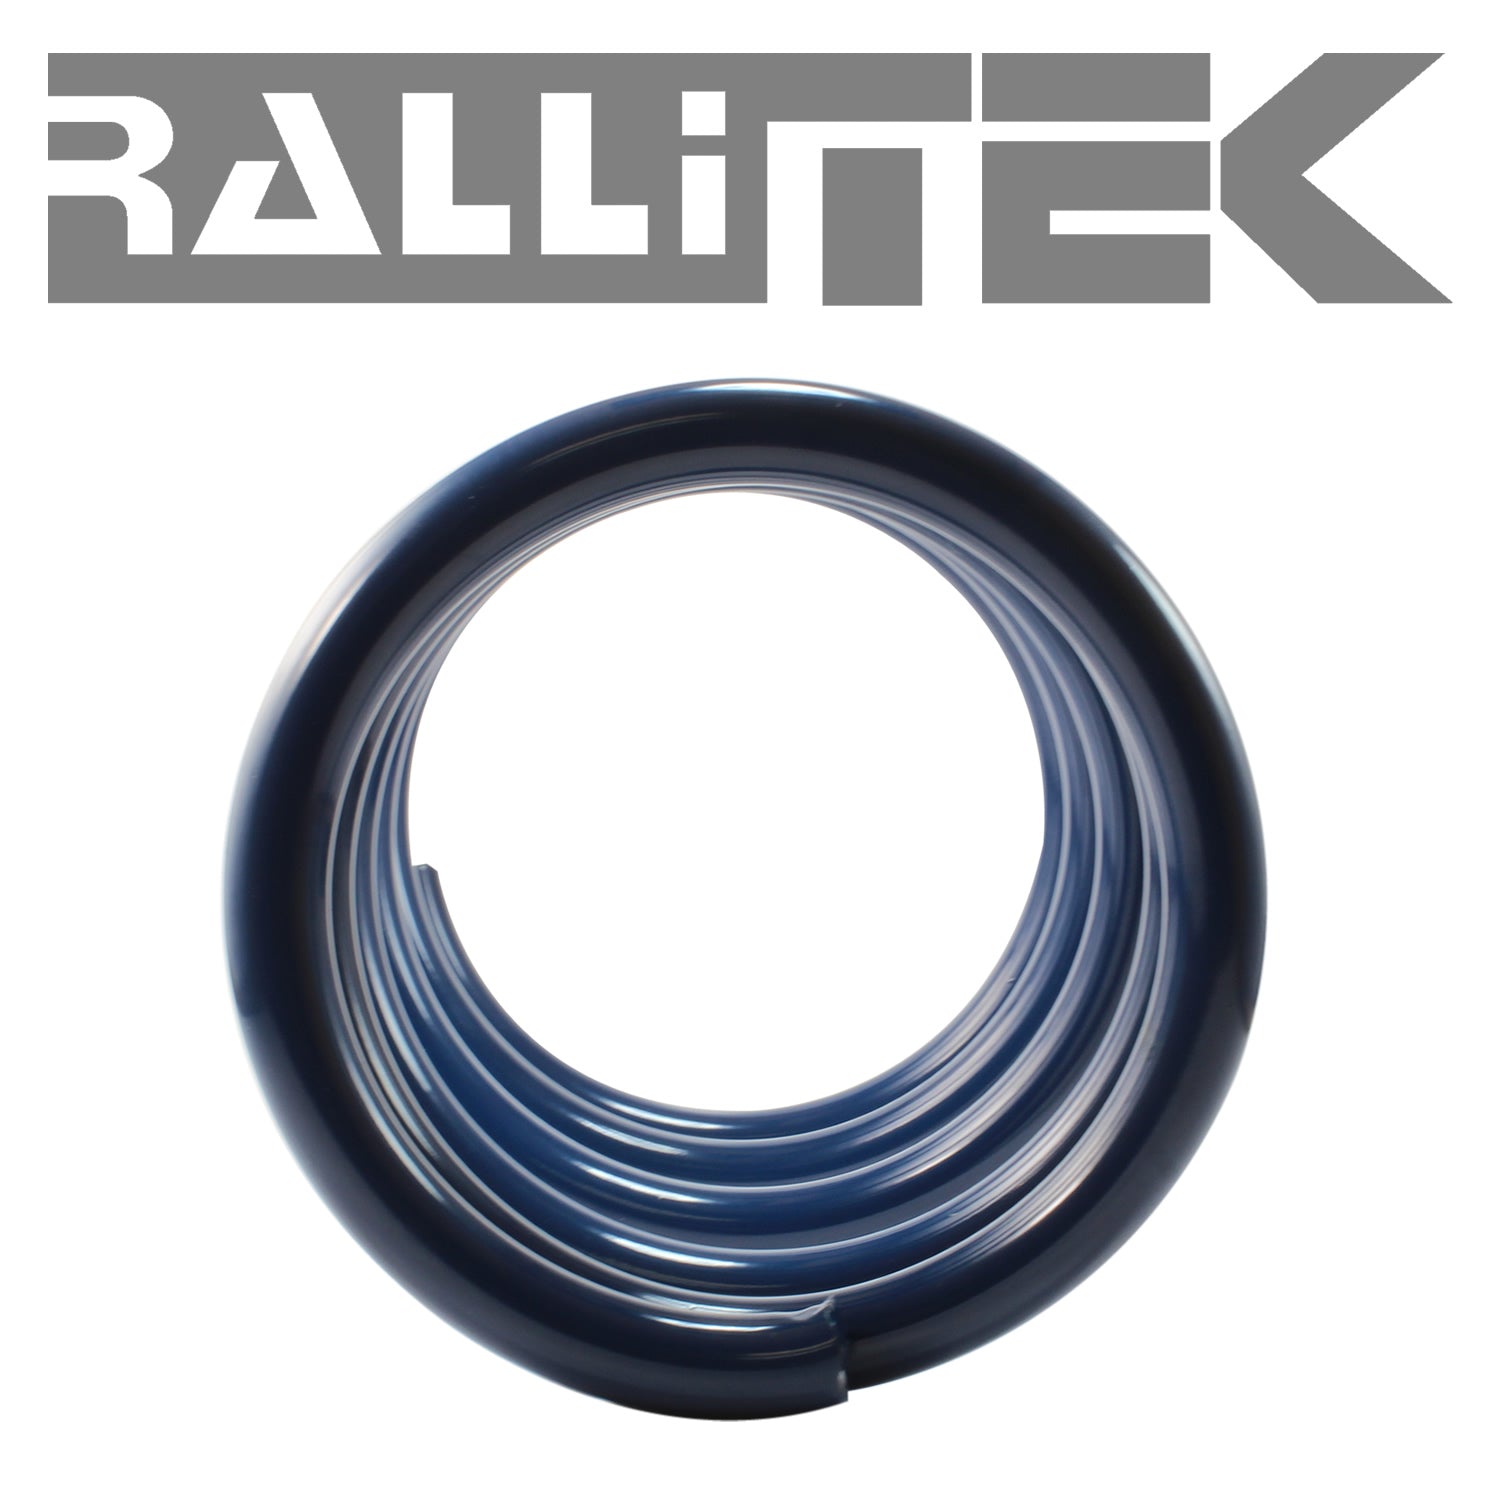 RalliTEK Front Sport Spring for the Subaru Crosstrek Inner